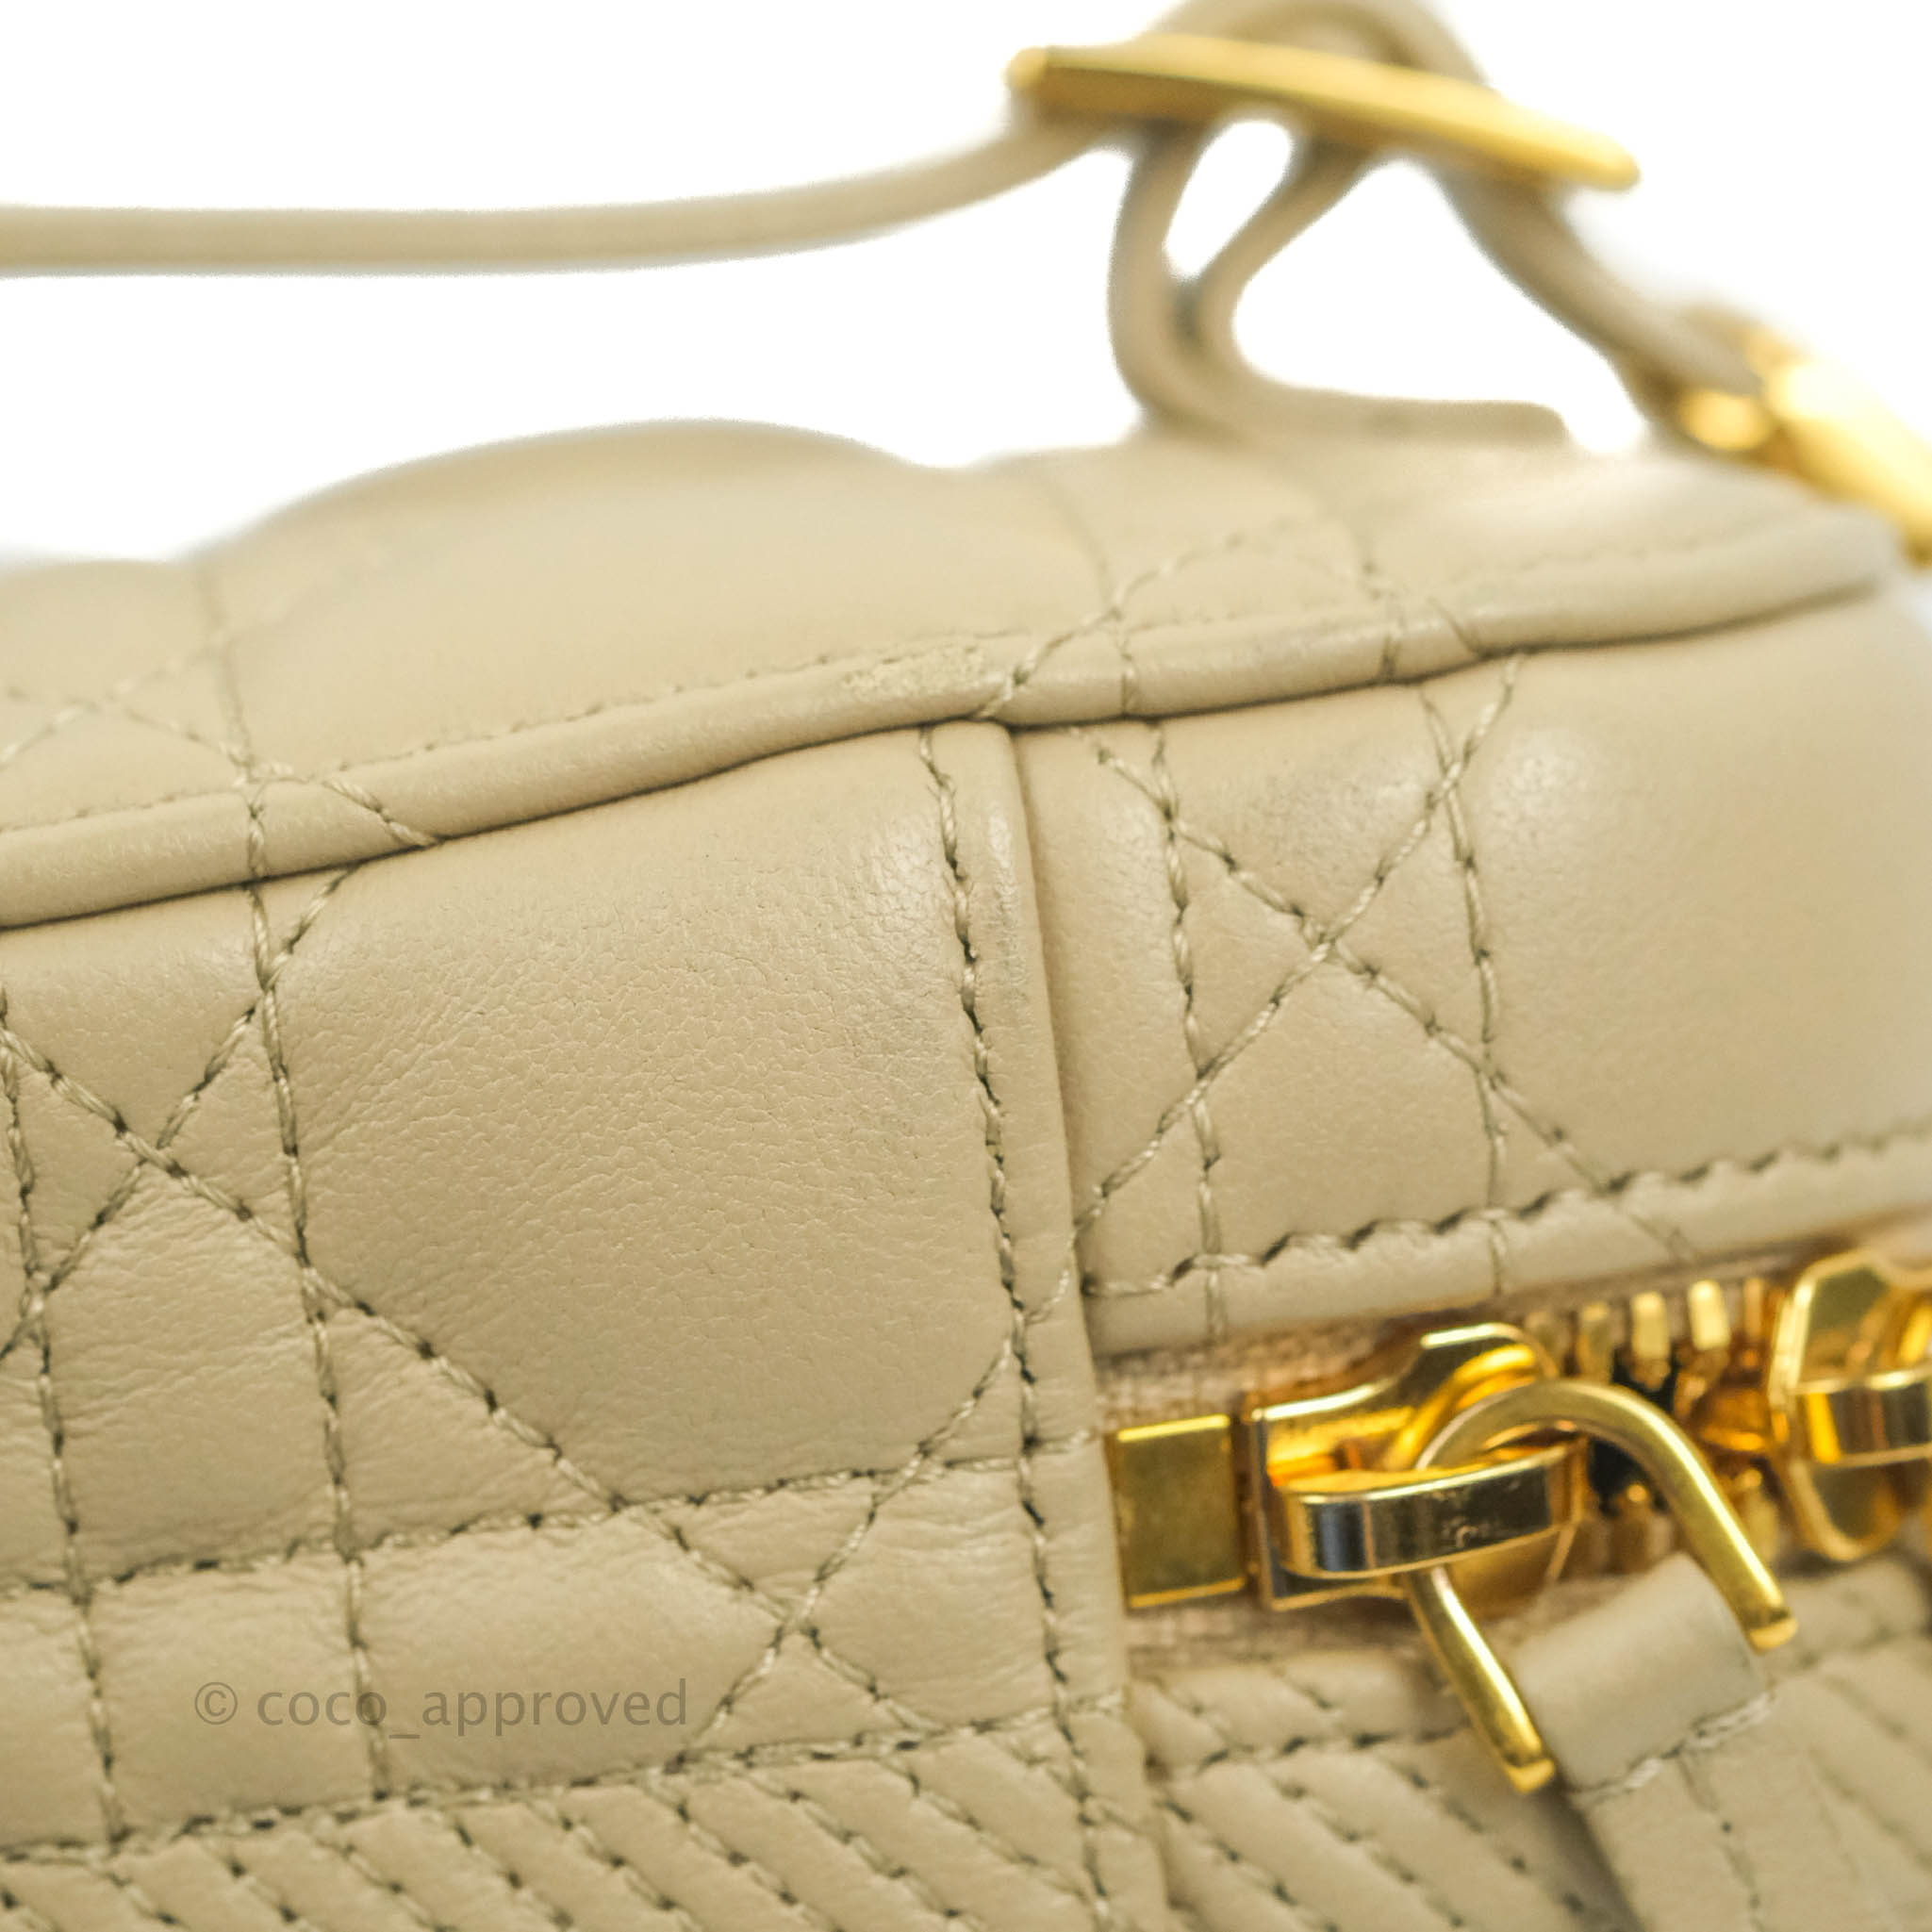 Louis Vuitton Leather Vanity PM versus DiorTravel Vanity Bag